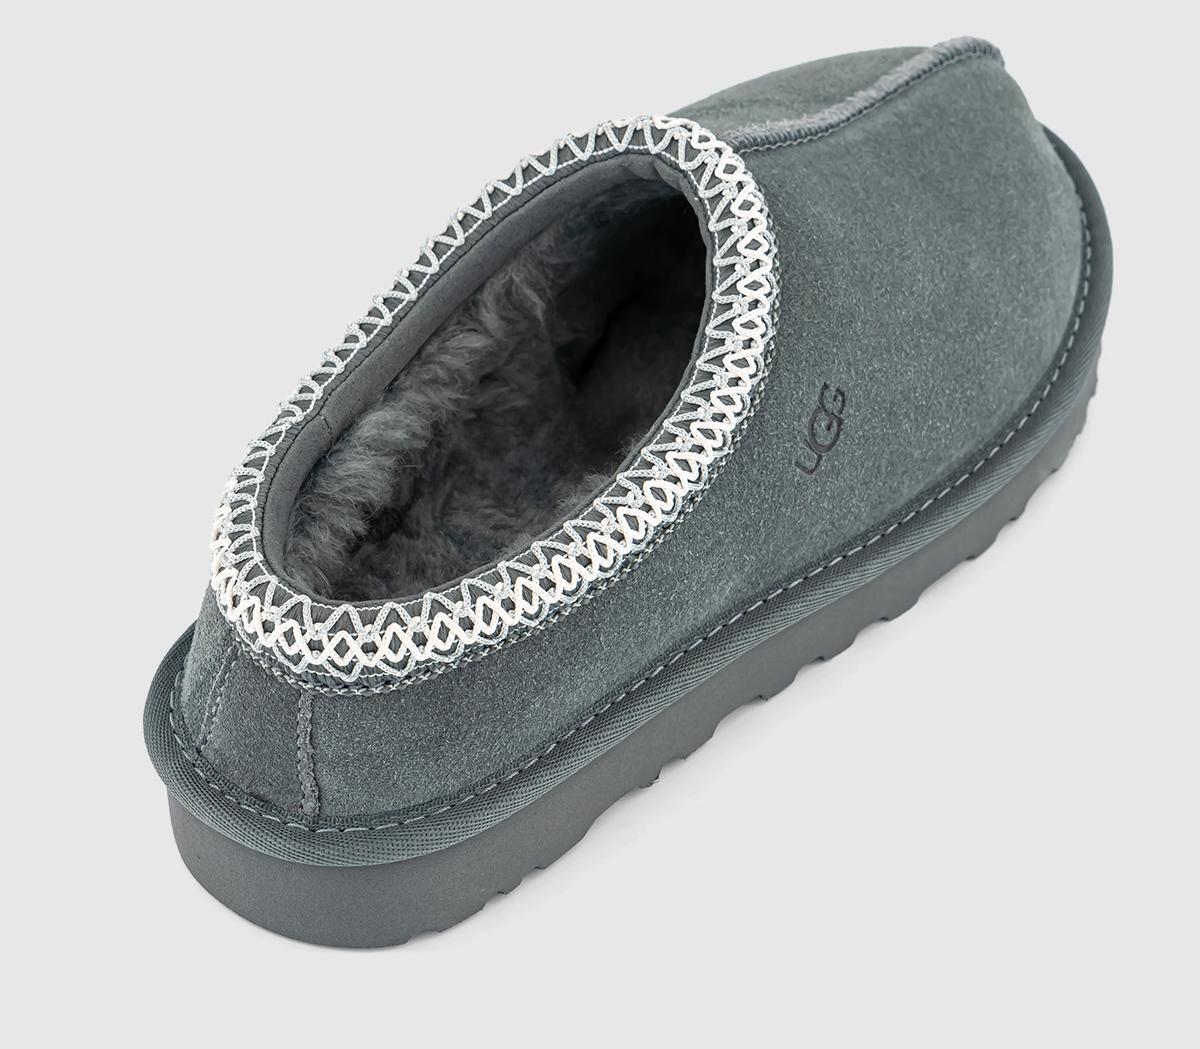 UGG Tasman Slippers Rainstorm - Flat Shoes for Women